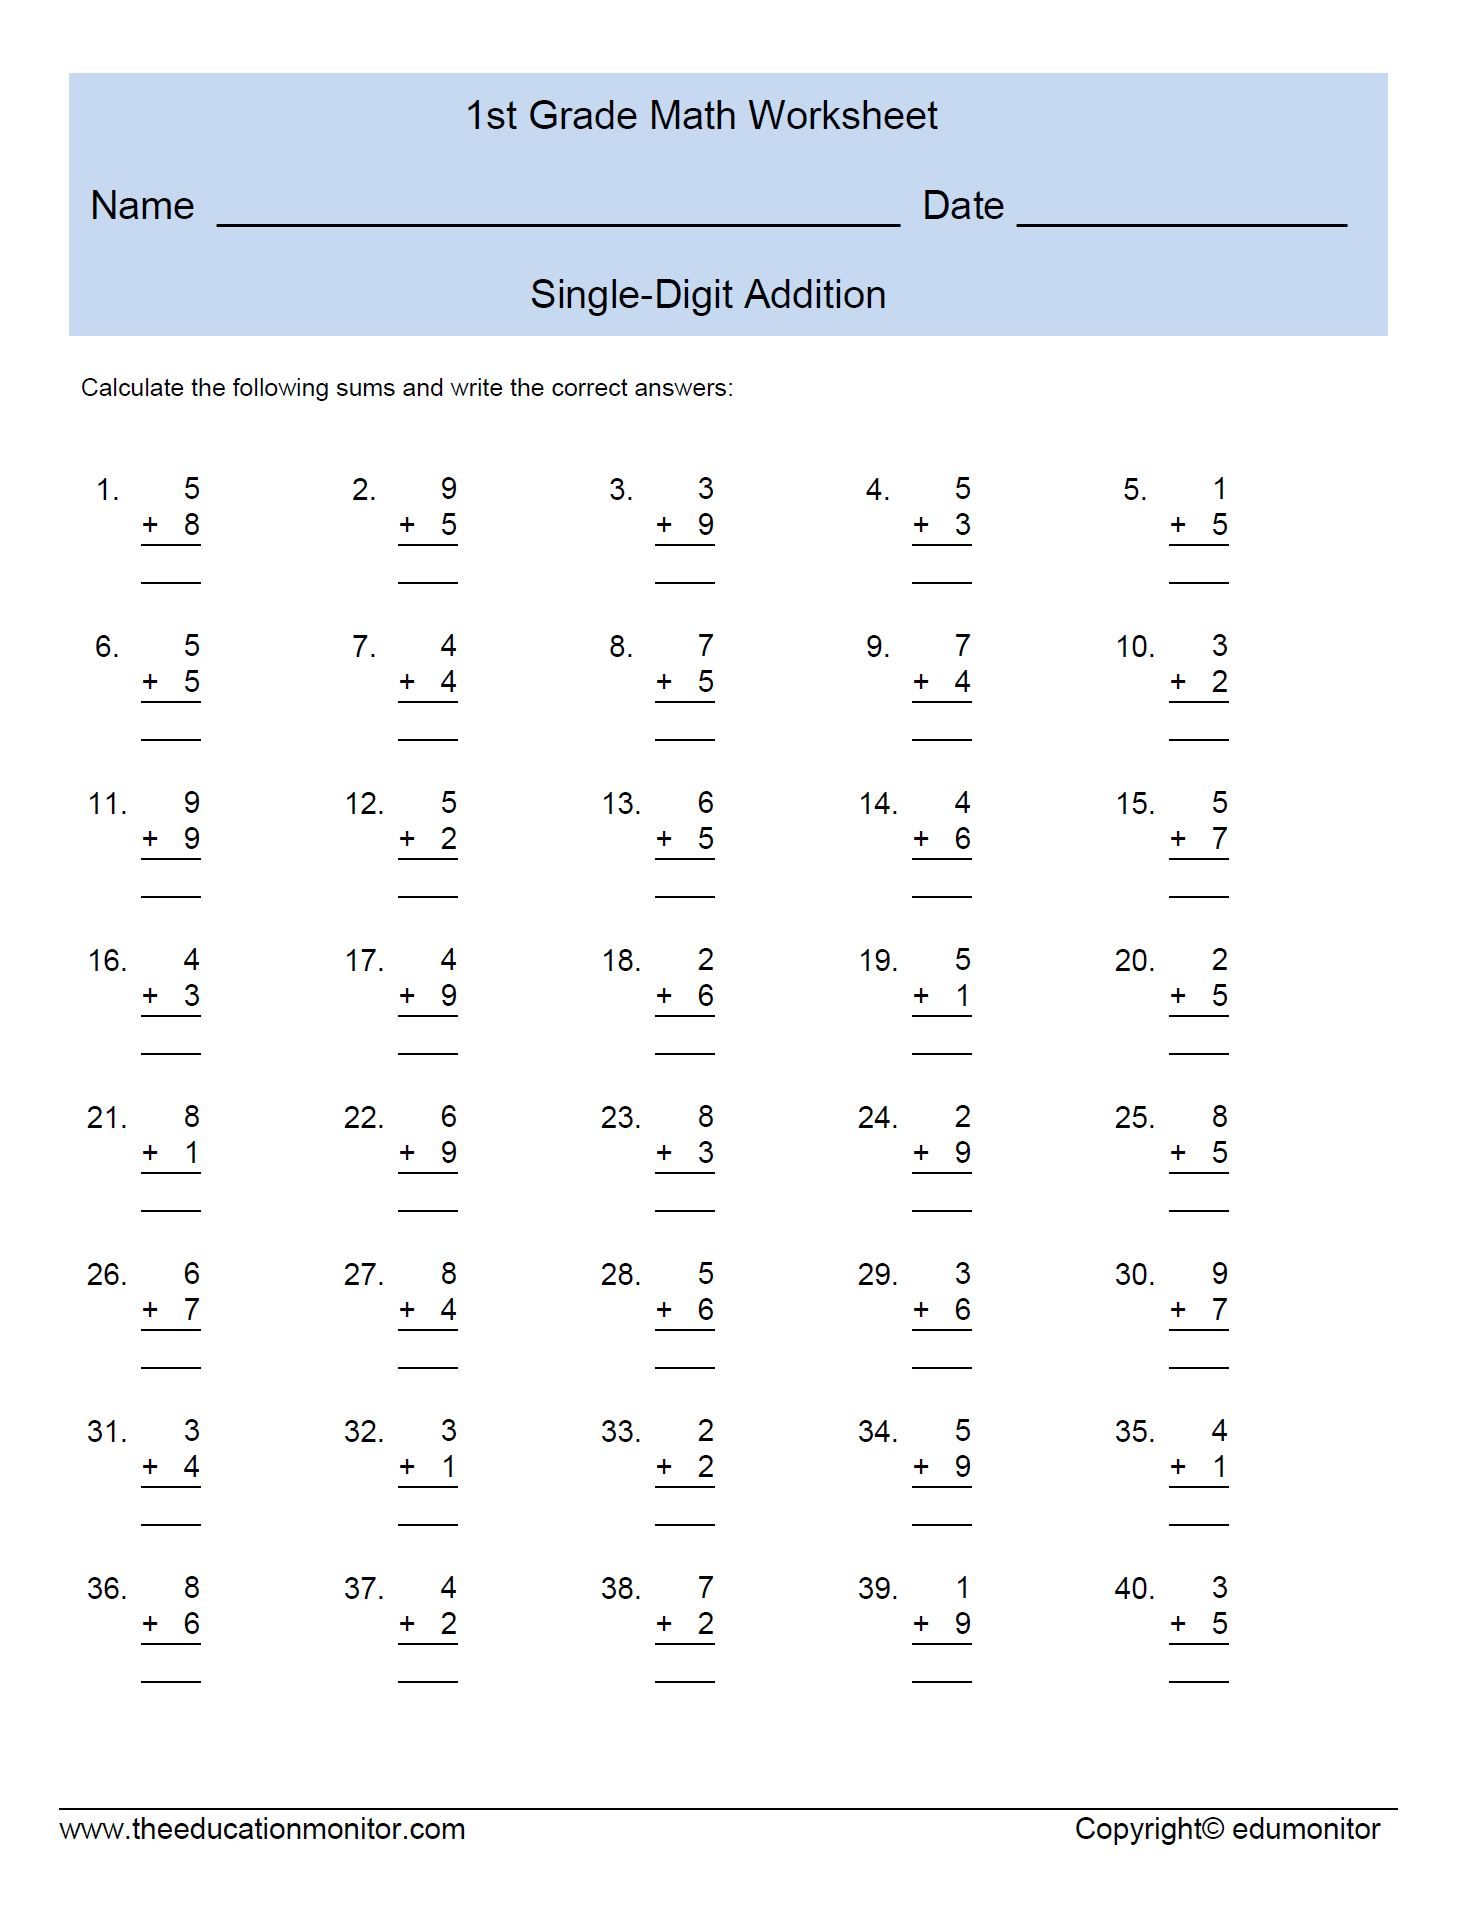 Worksheet For 1St Grade Math Explore Worksheet